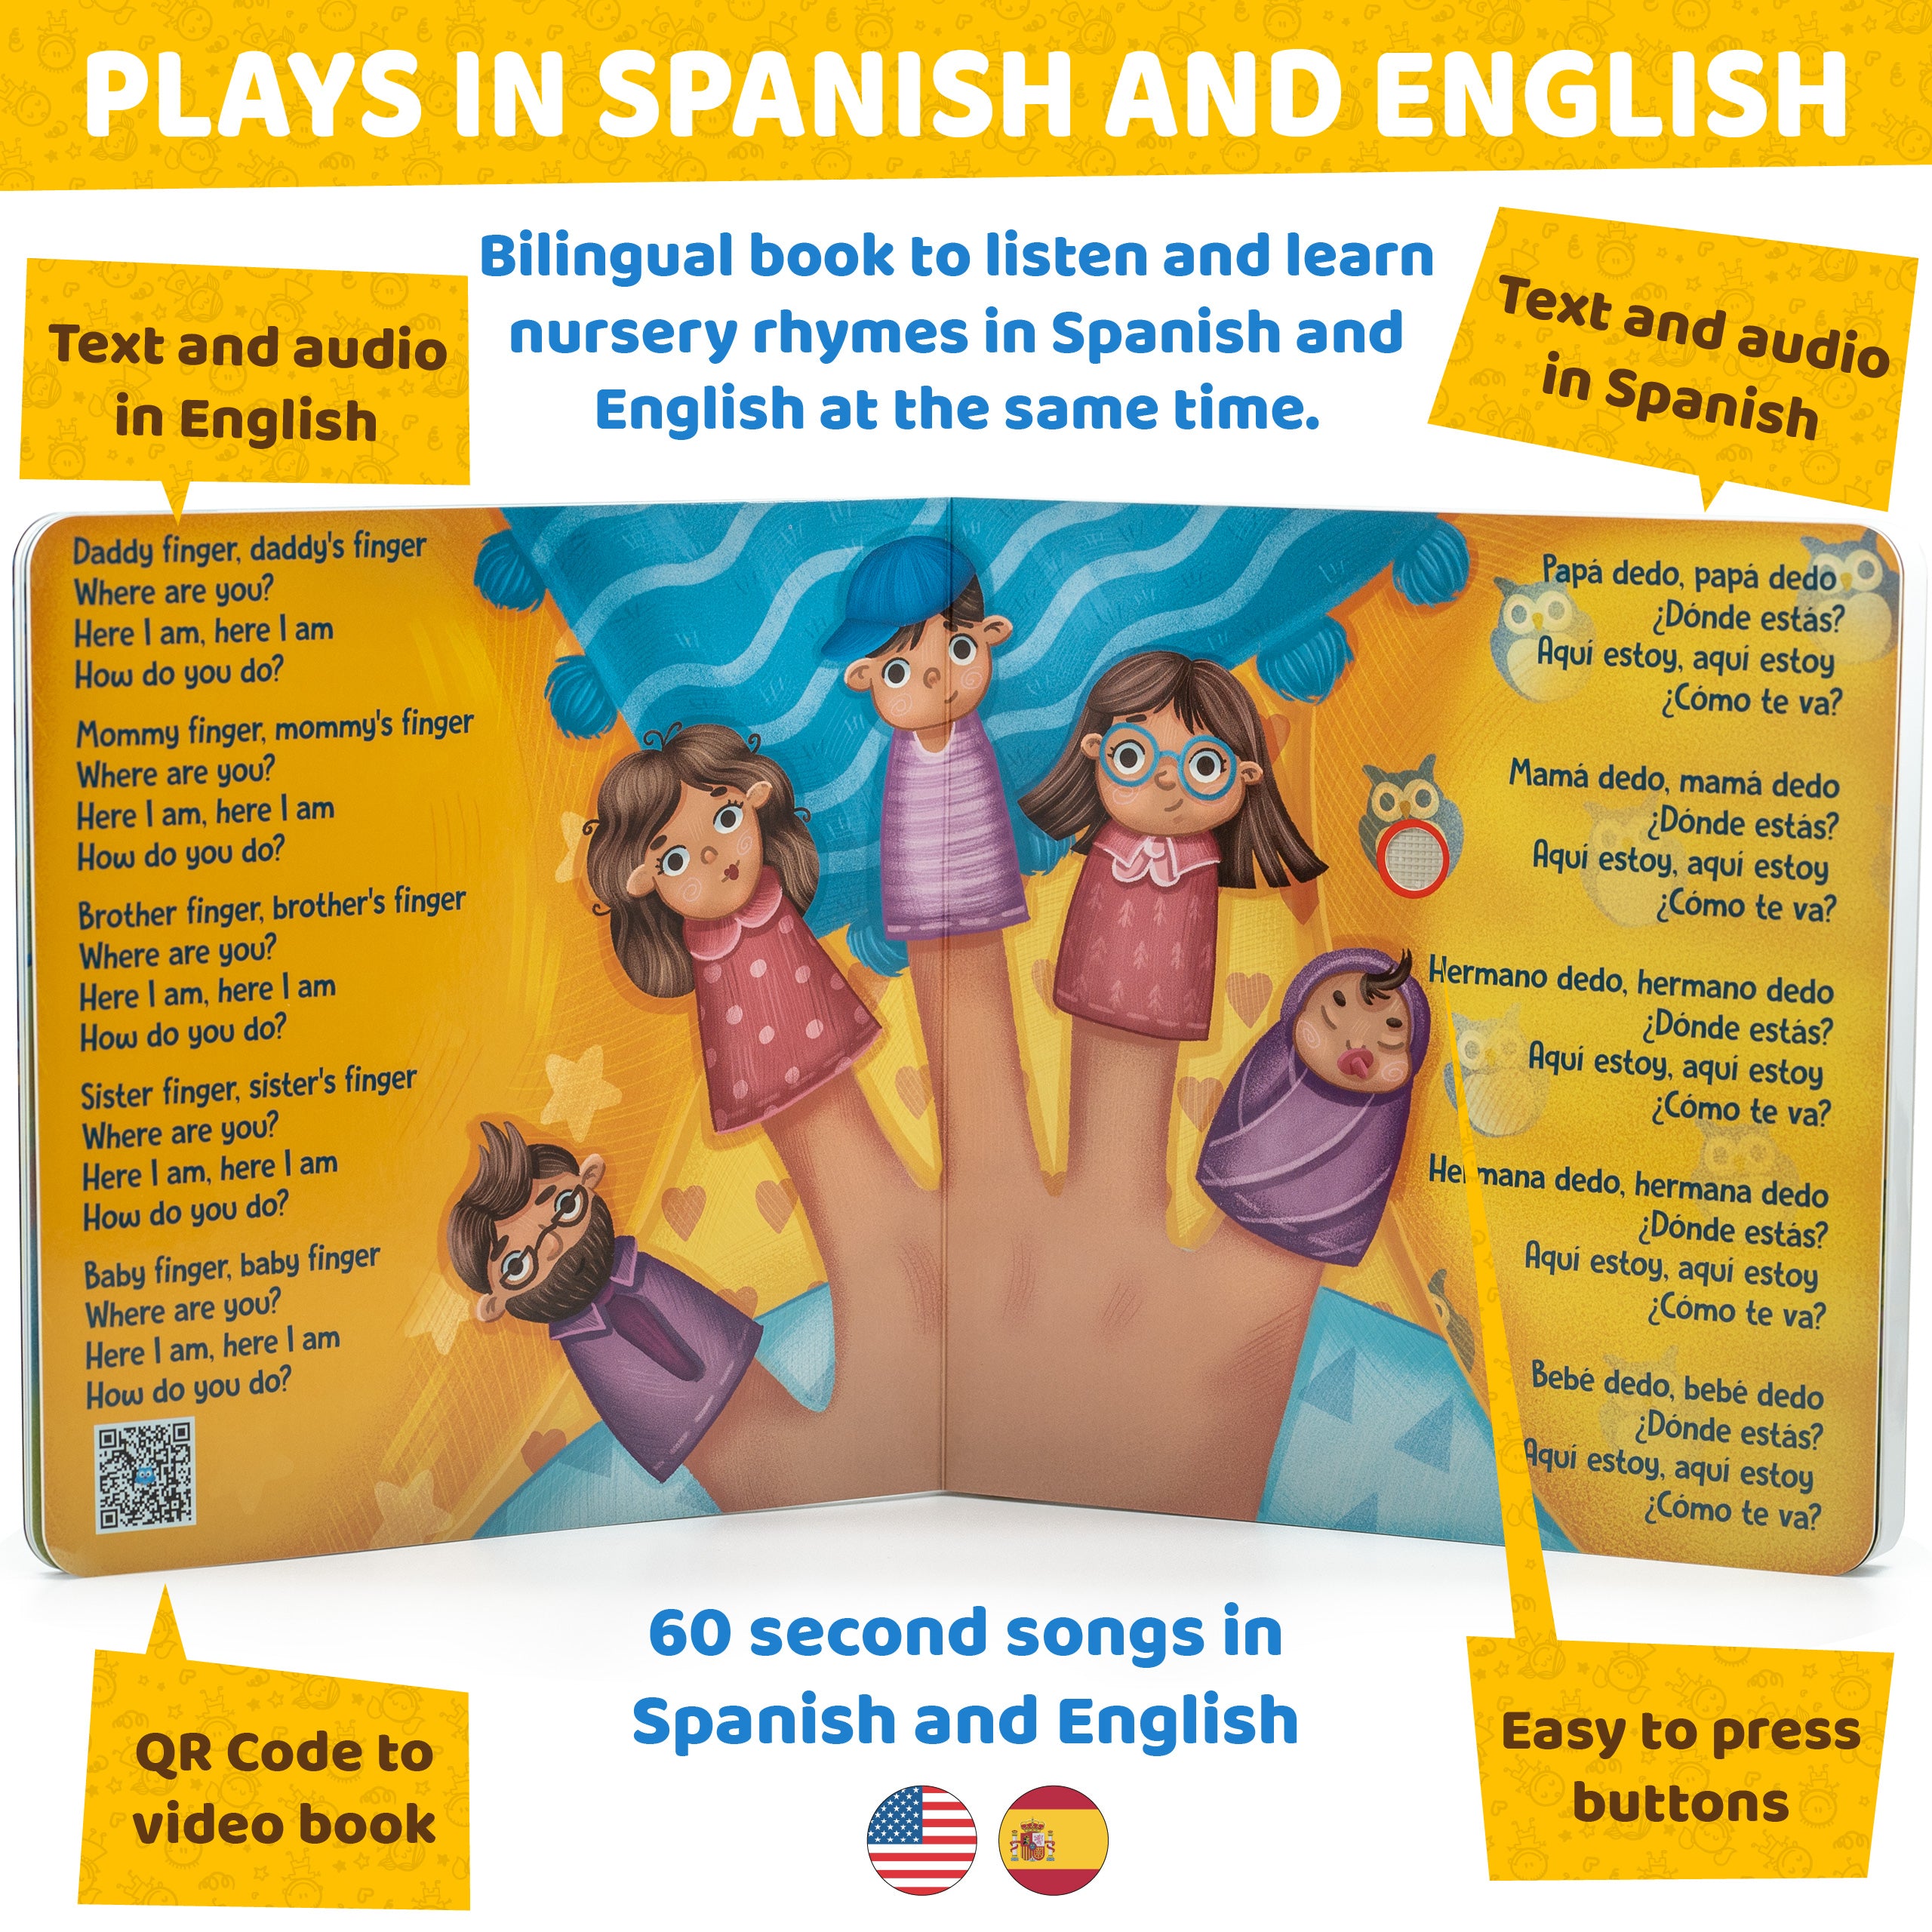 Typical English Nursery Rhymes - Spanish & English Bilingual Sound Book - Gufino Bilingual Learning